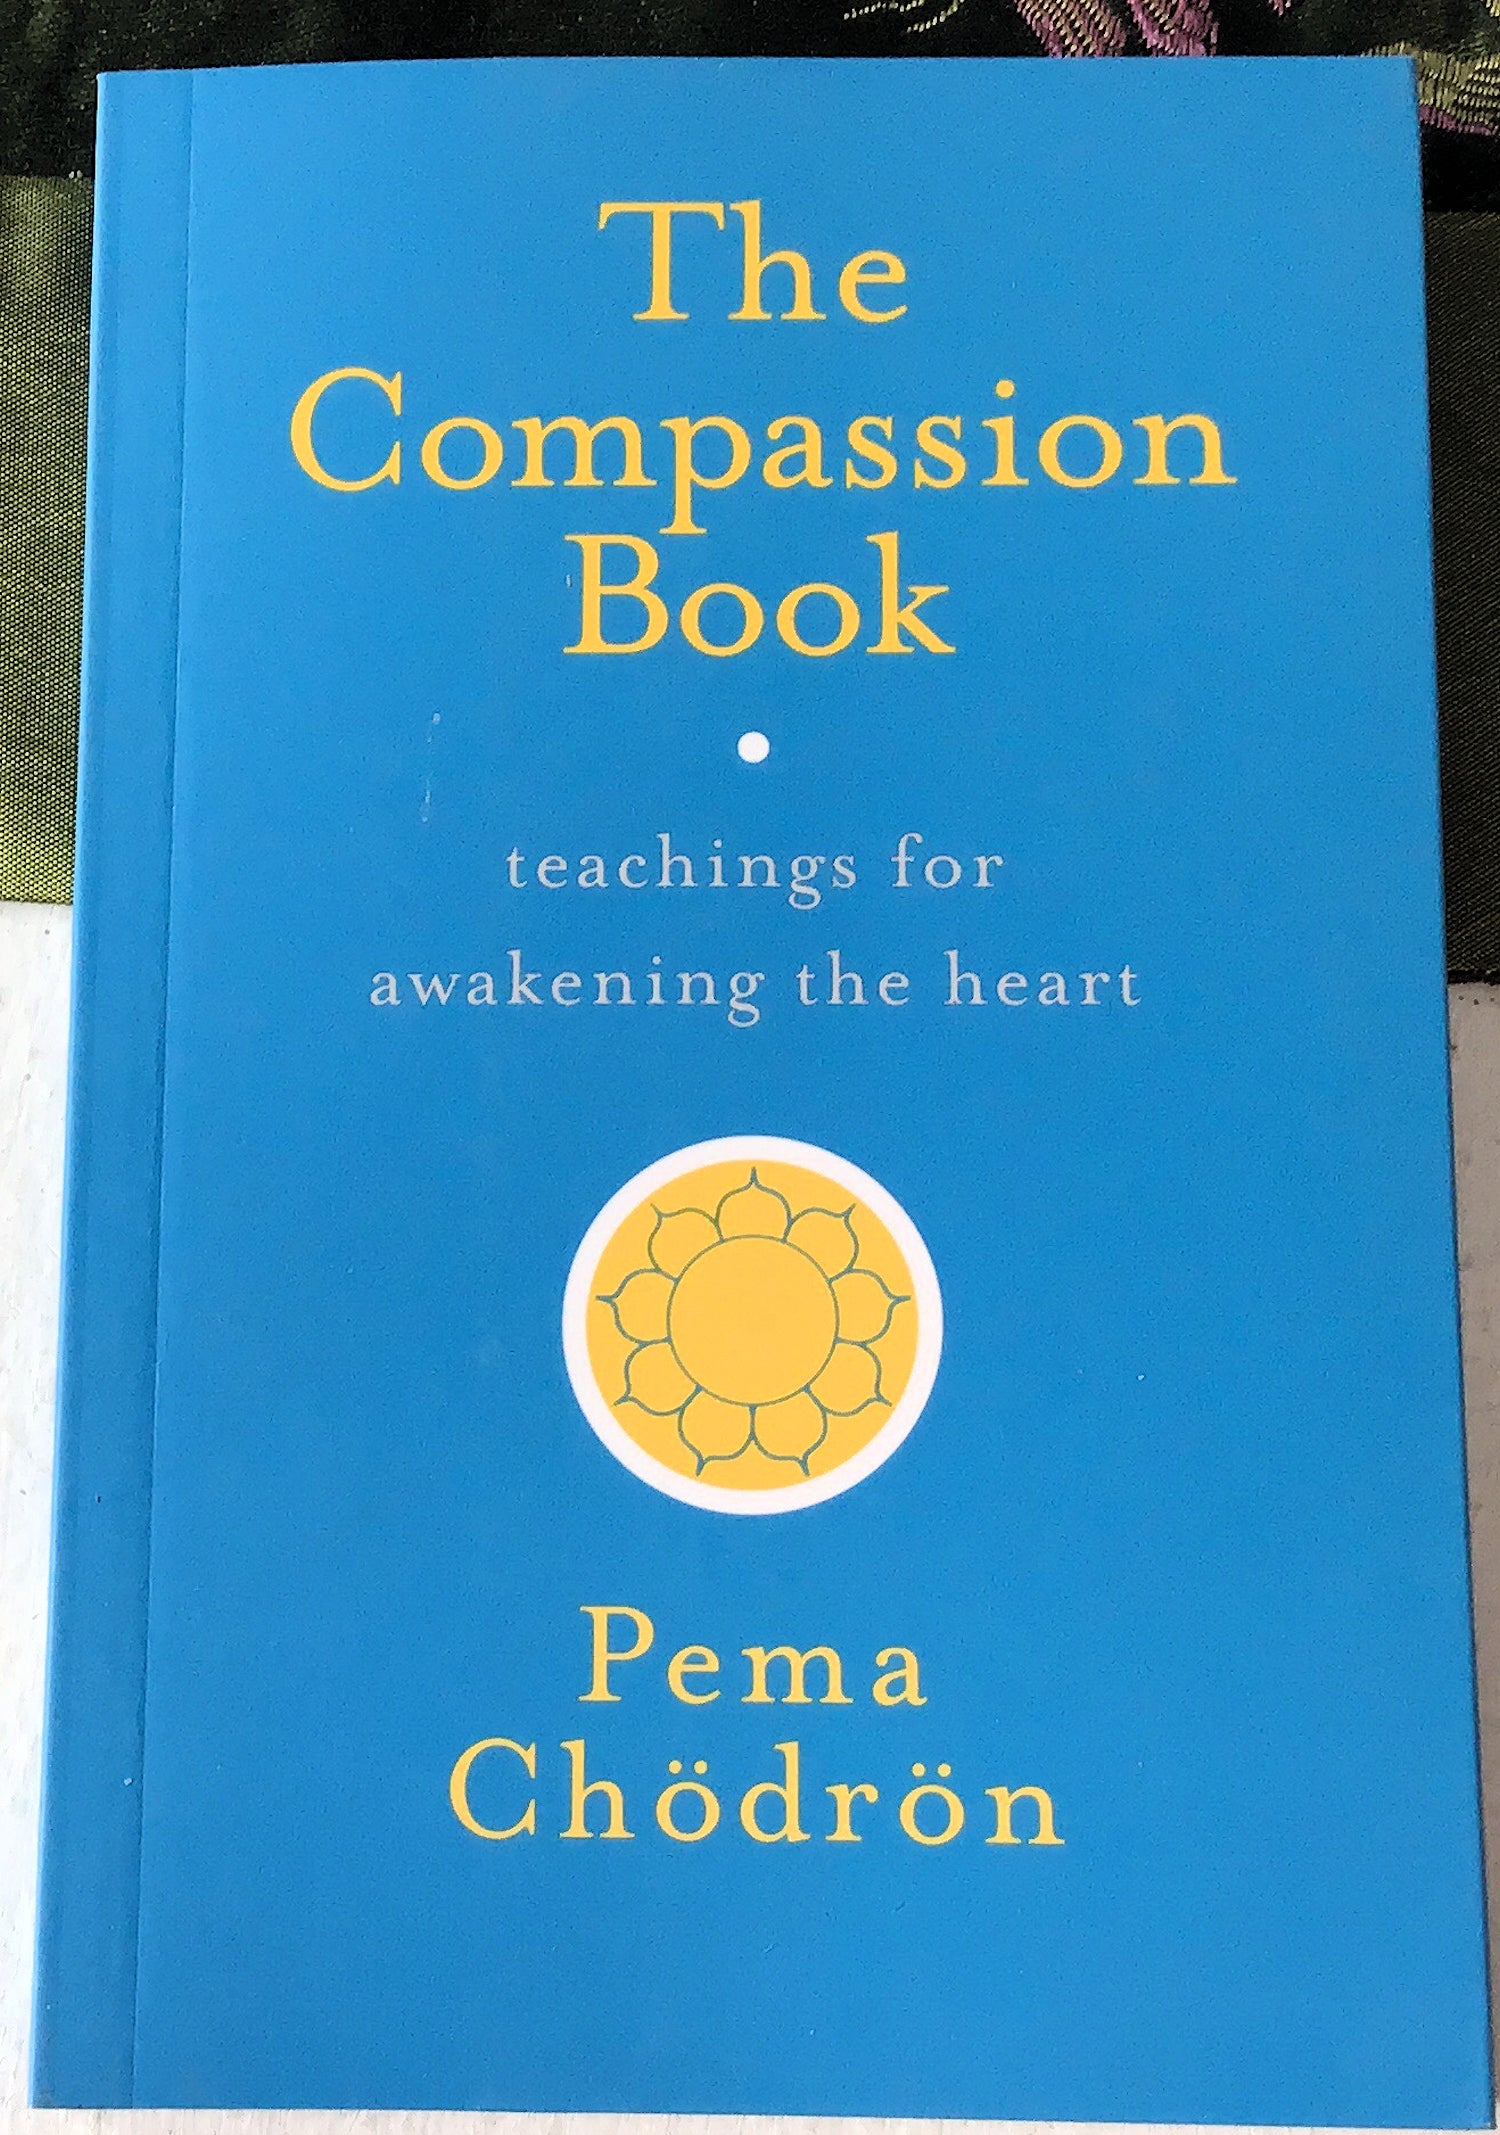 The Compassion Book, Teachings to Awaken the Heart, Pema Chodron